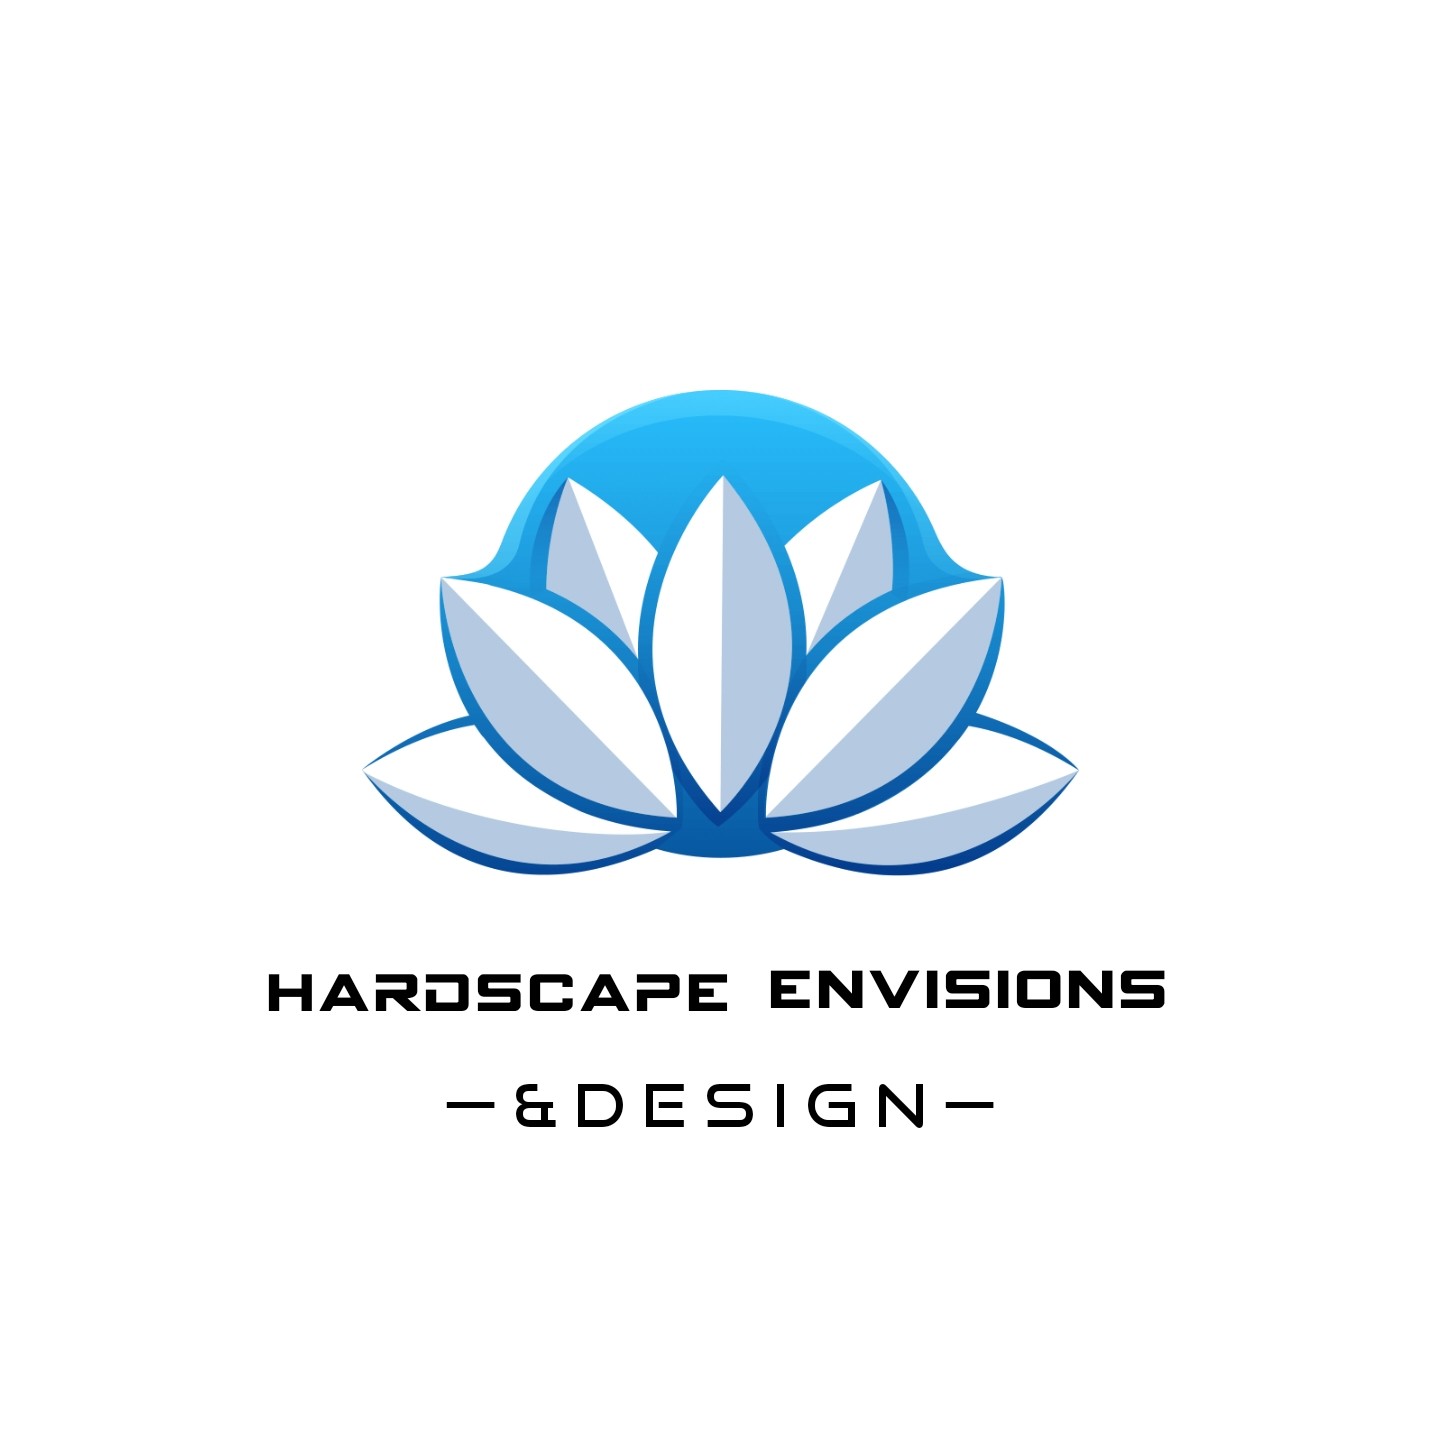 Hardscape Envisions and Design Logo